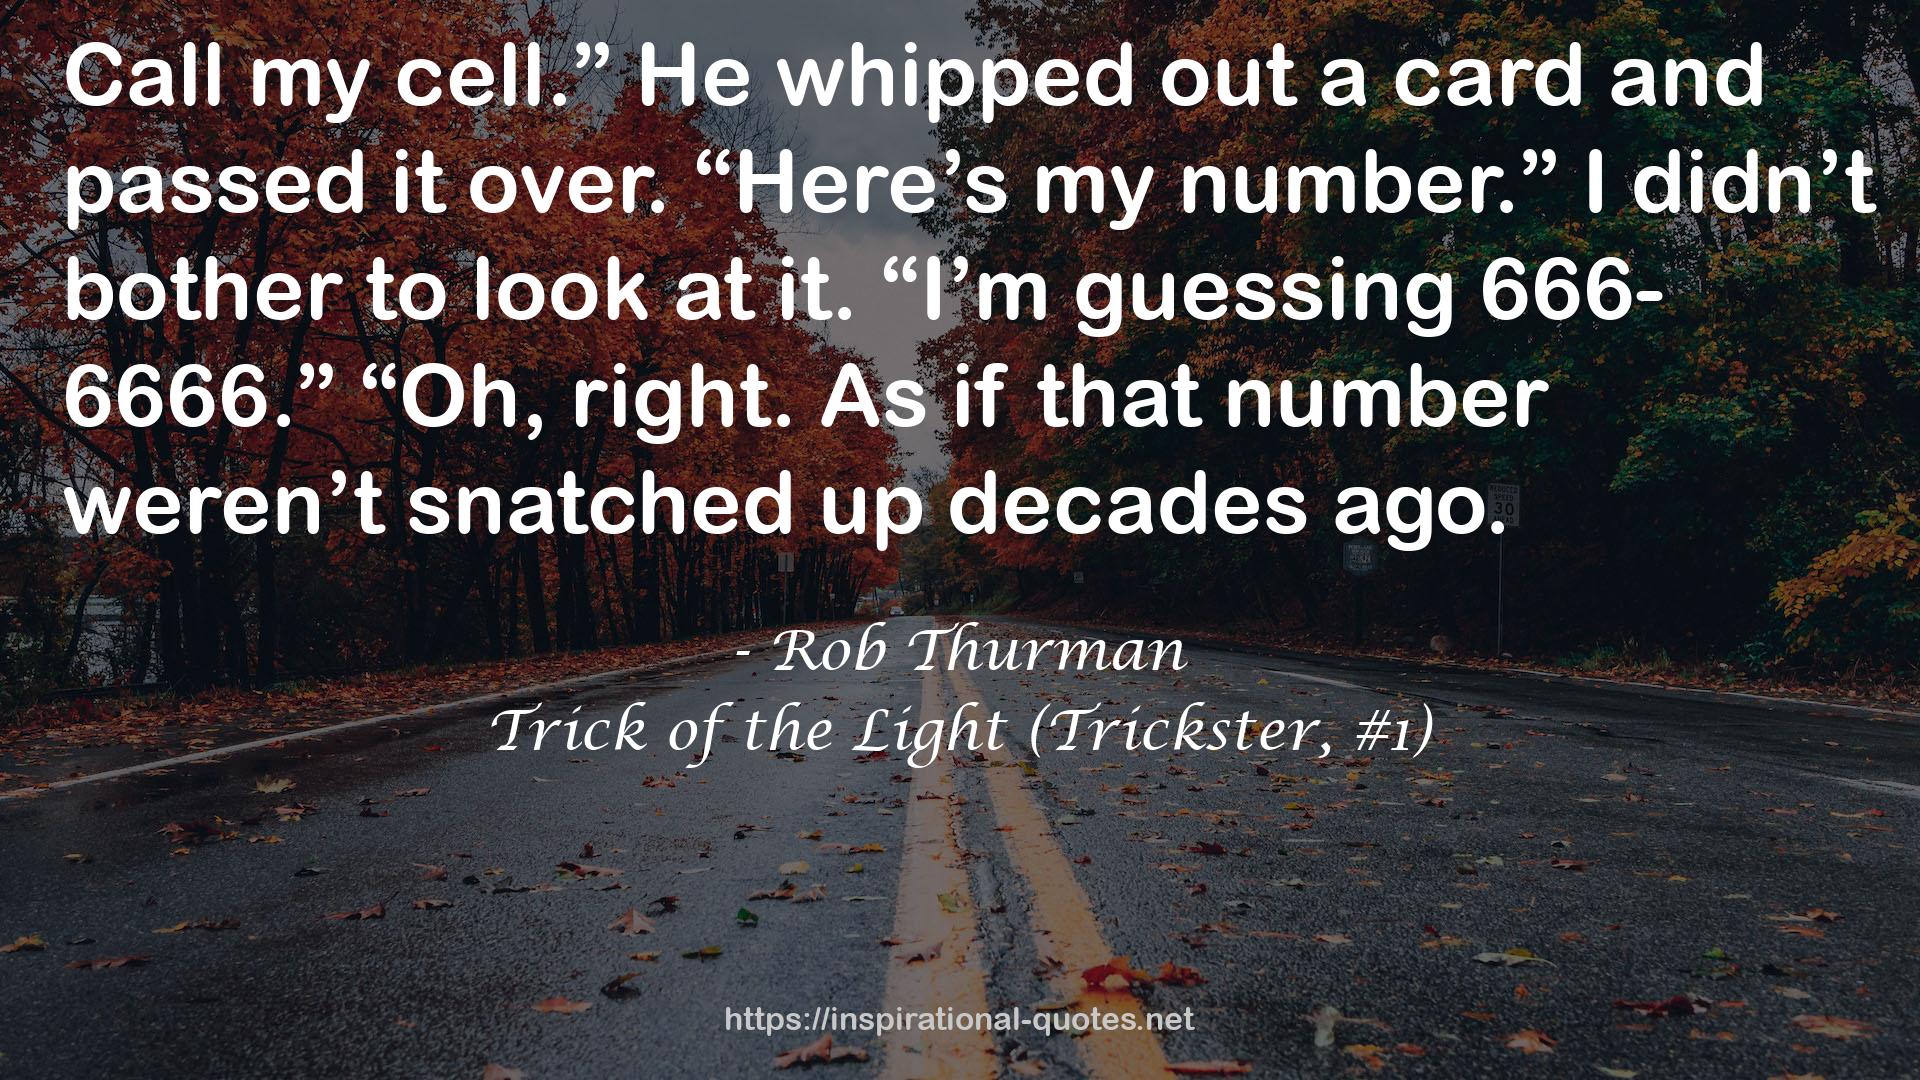 Rob Thurman QUOTES